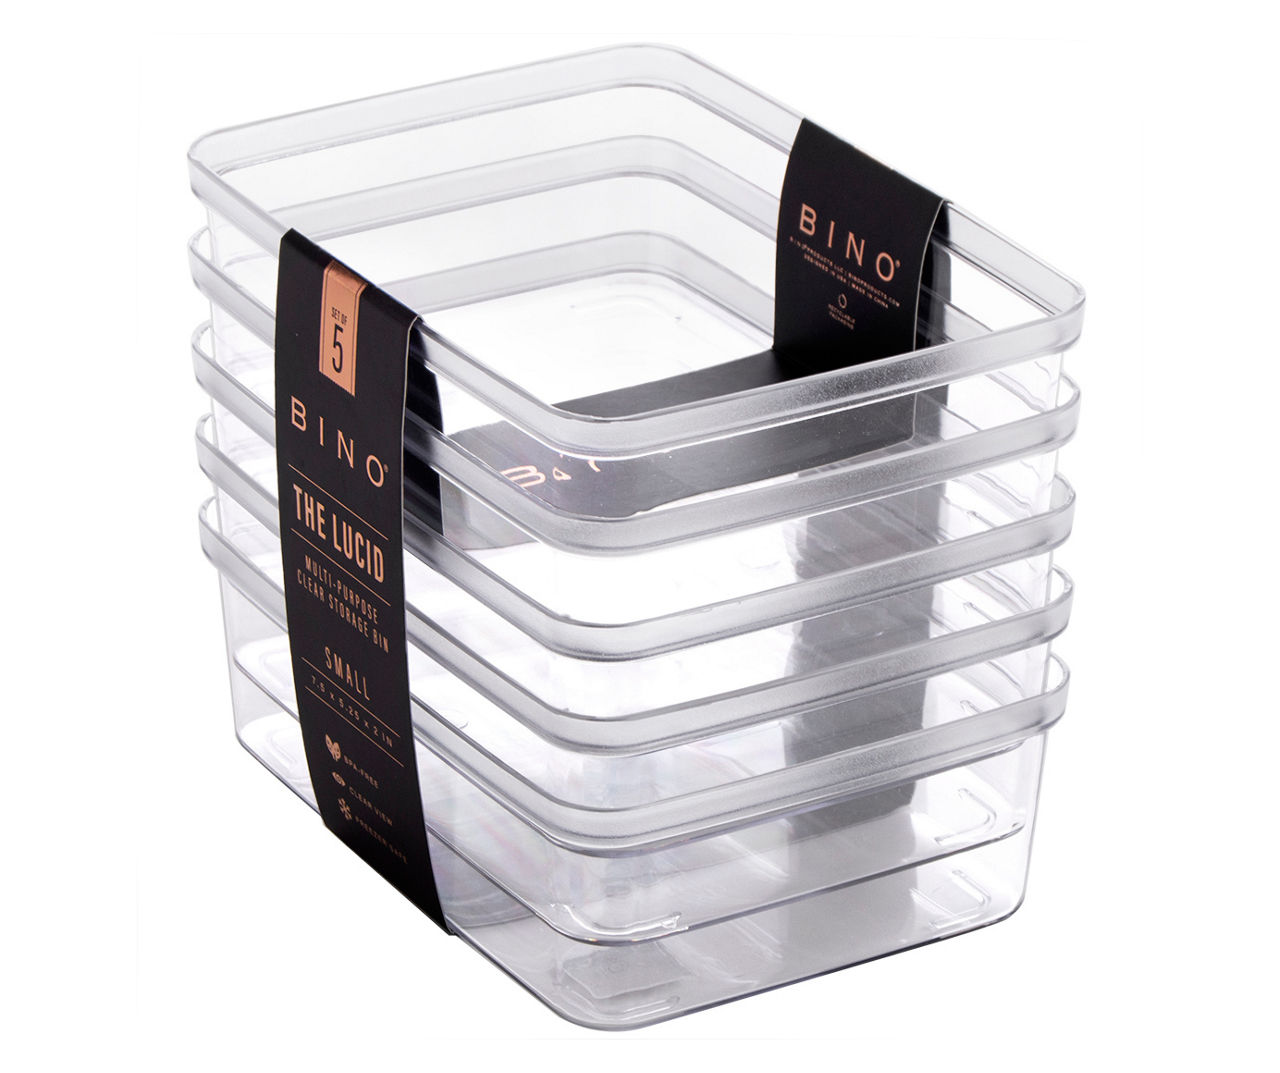 BINO, Plastic Storage Bins, Small – 4 Pack